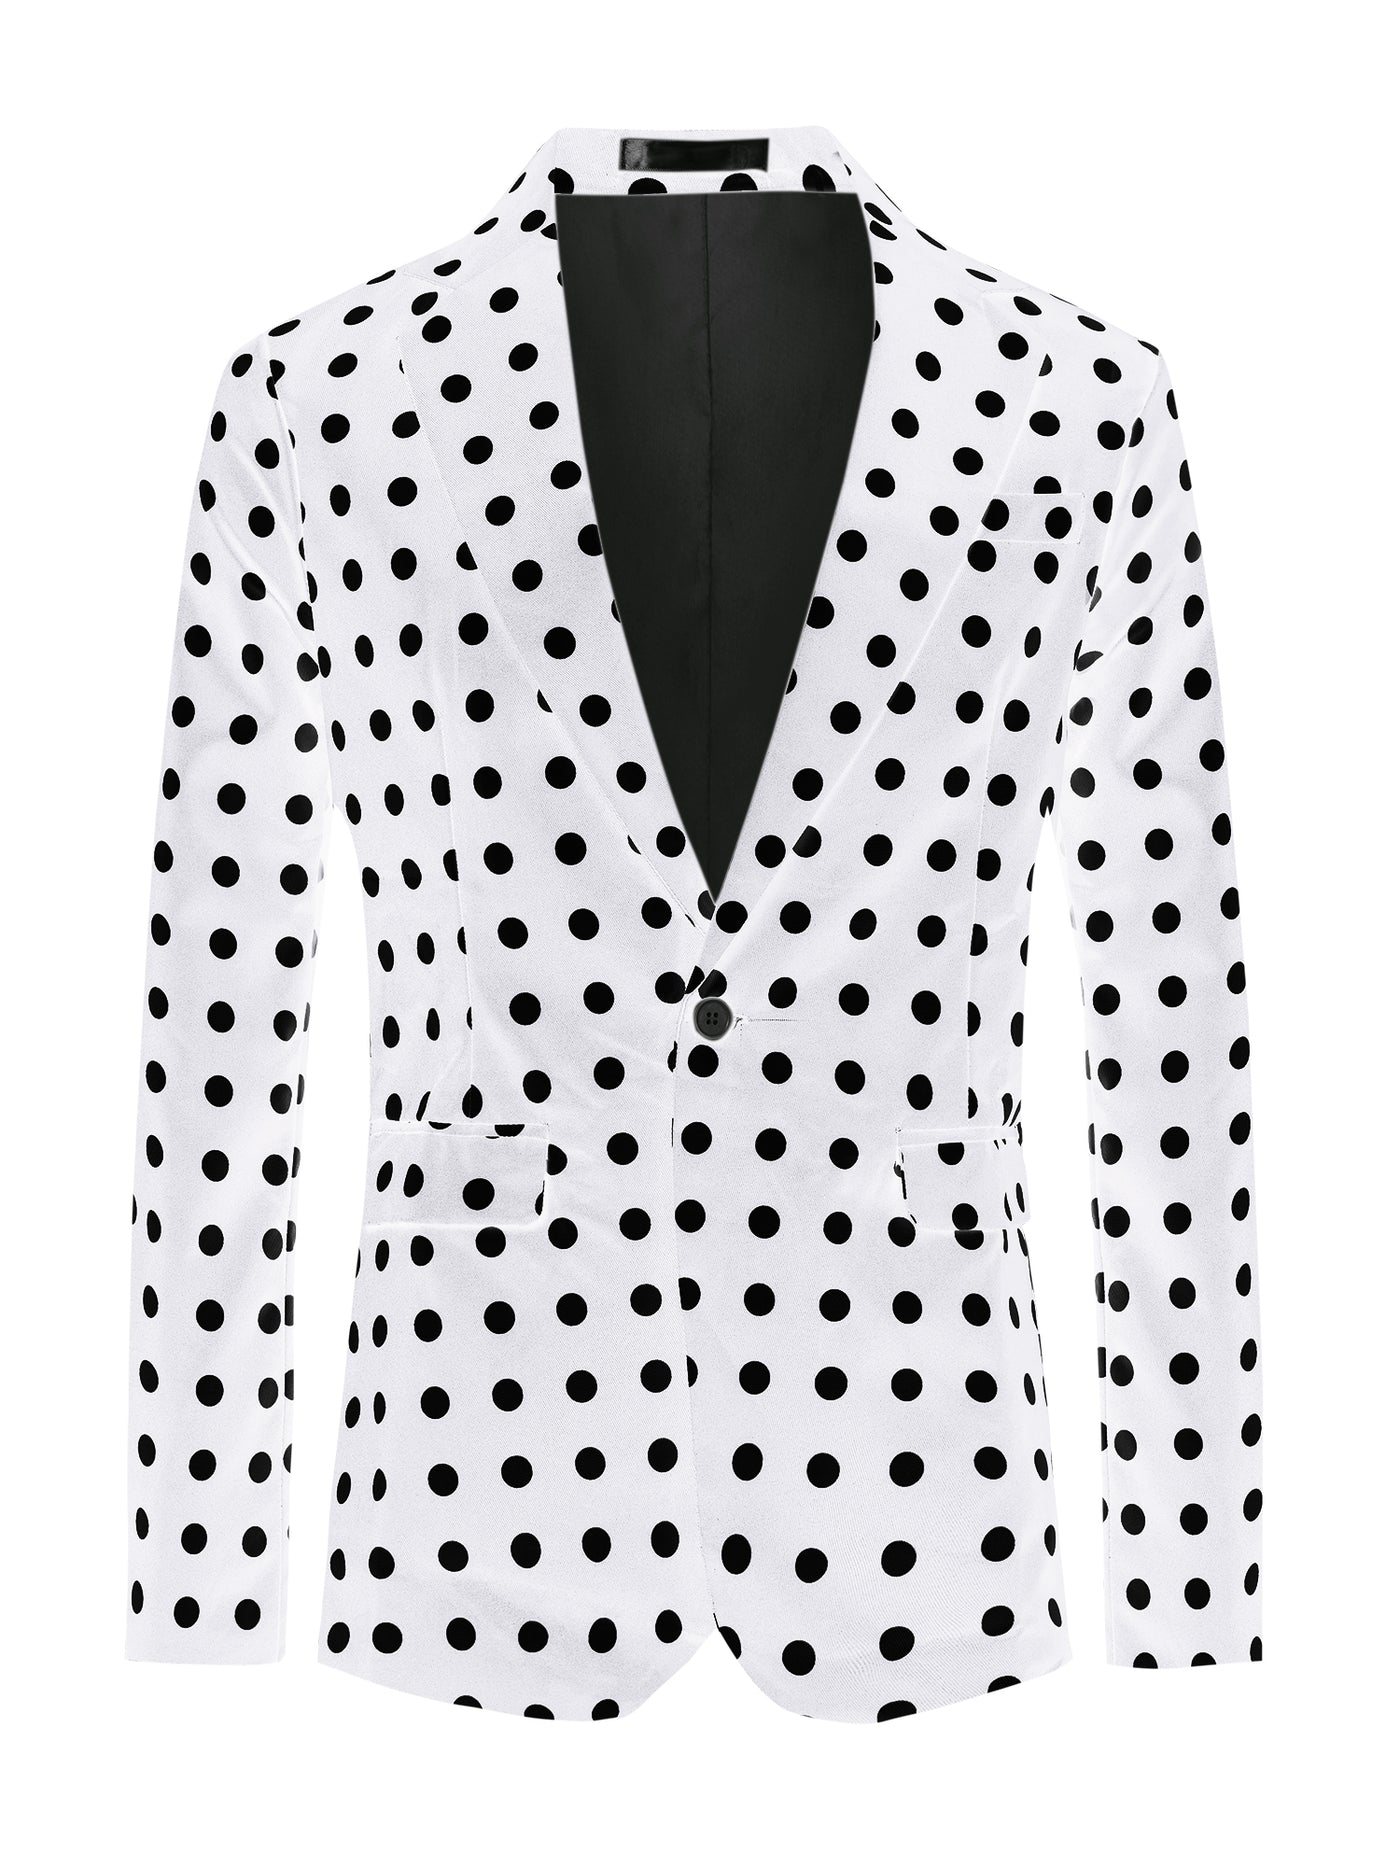 Bublédon Polka Dots Blazers for Men's Classic Slim Fit One Button Business Sport Coats